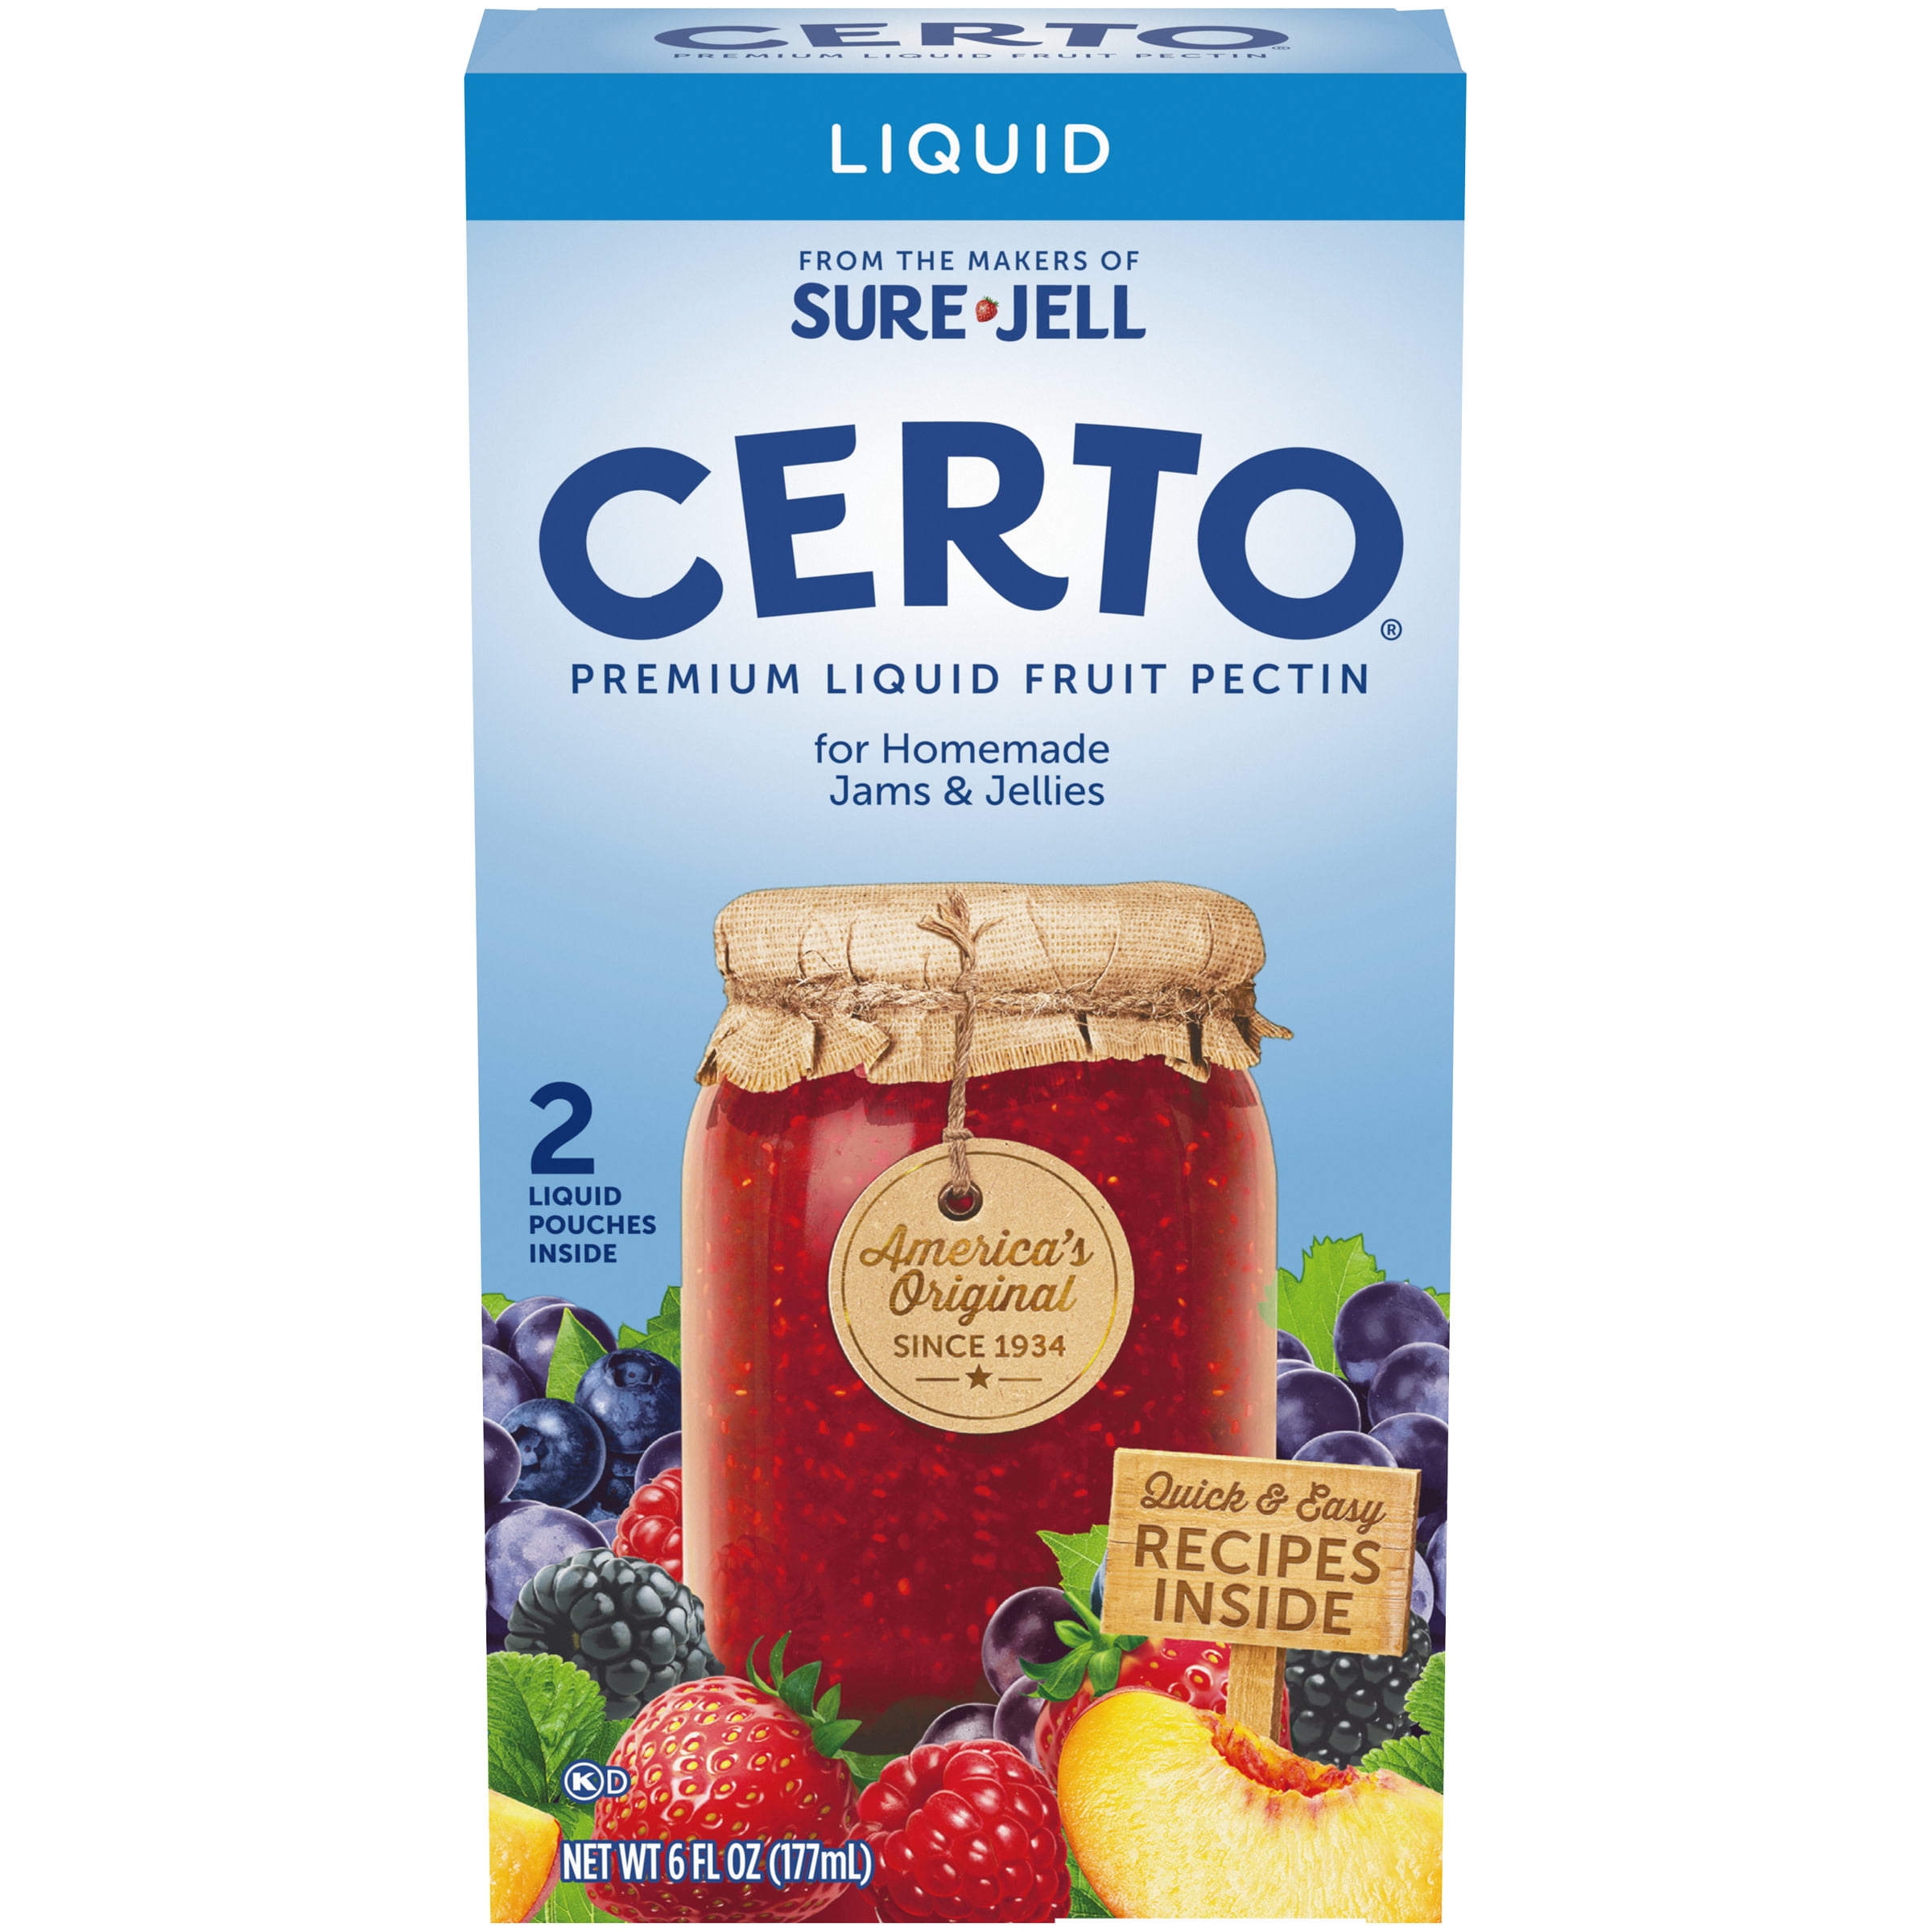 America's original since 1934, Certo is a liquid pectin that's id...